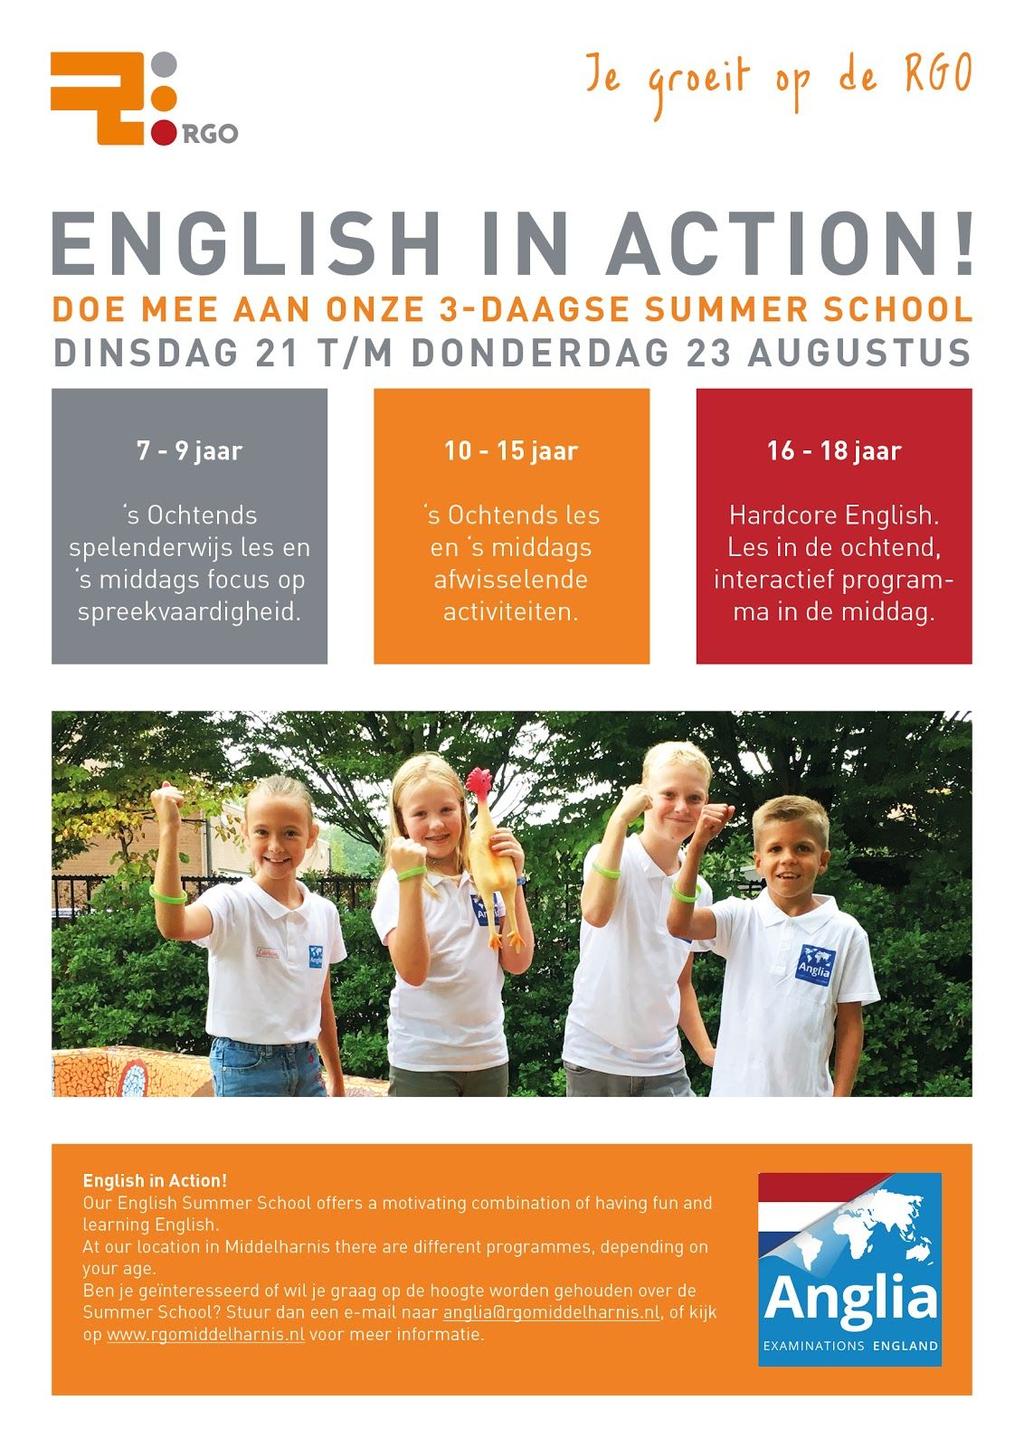 Anglia Summer School Deze zomer, op 21-22-23 augustus, wordt er weer een Anglia Summer School op de RGO georganiseerd: 3 dagen